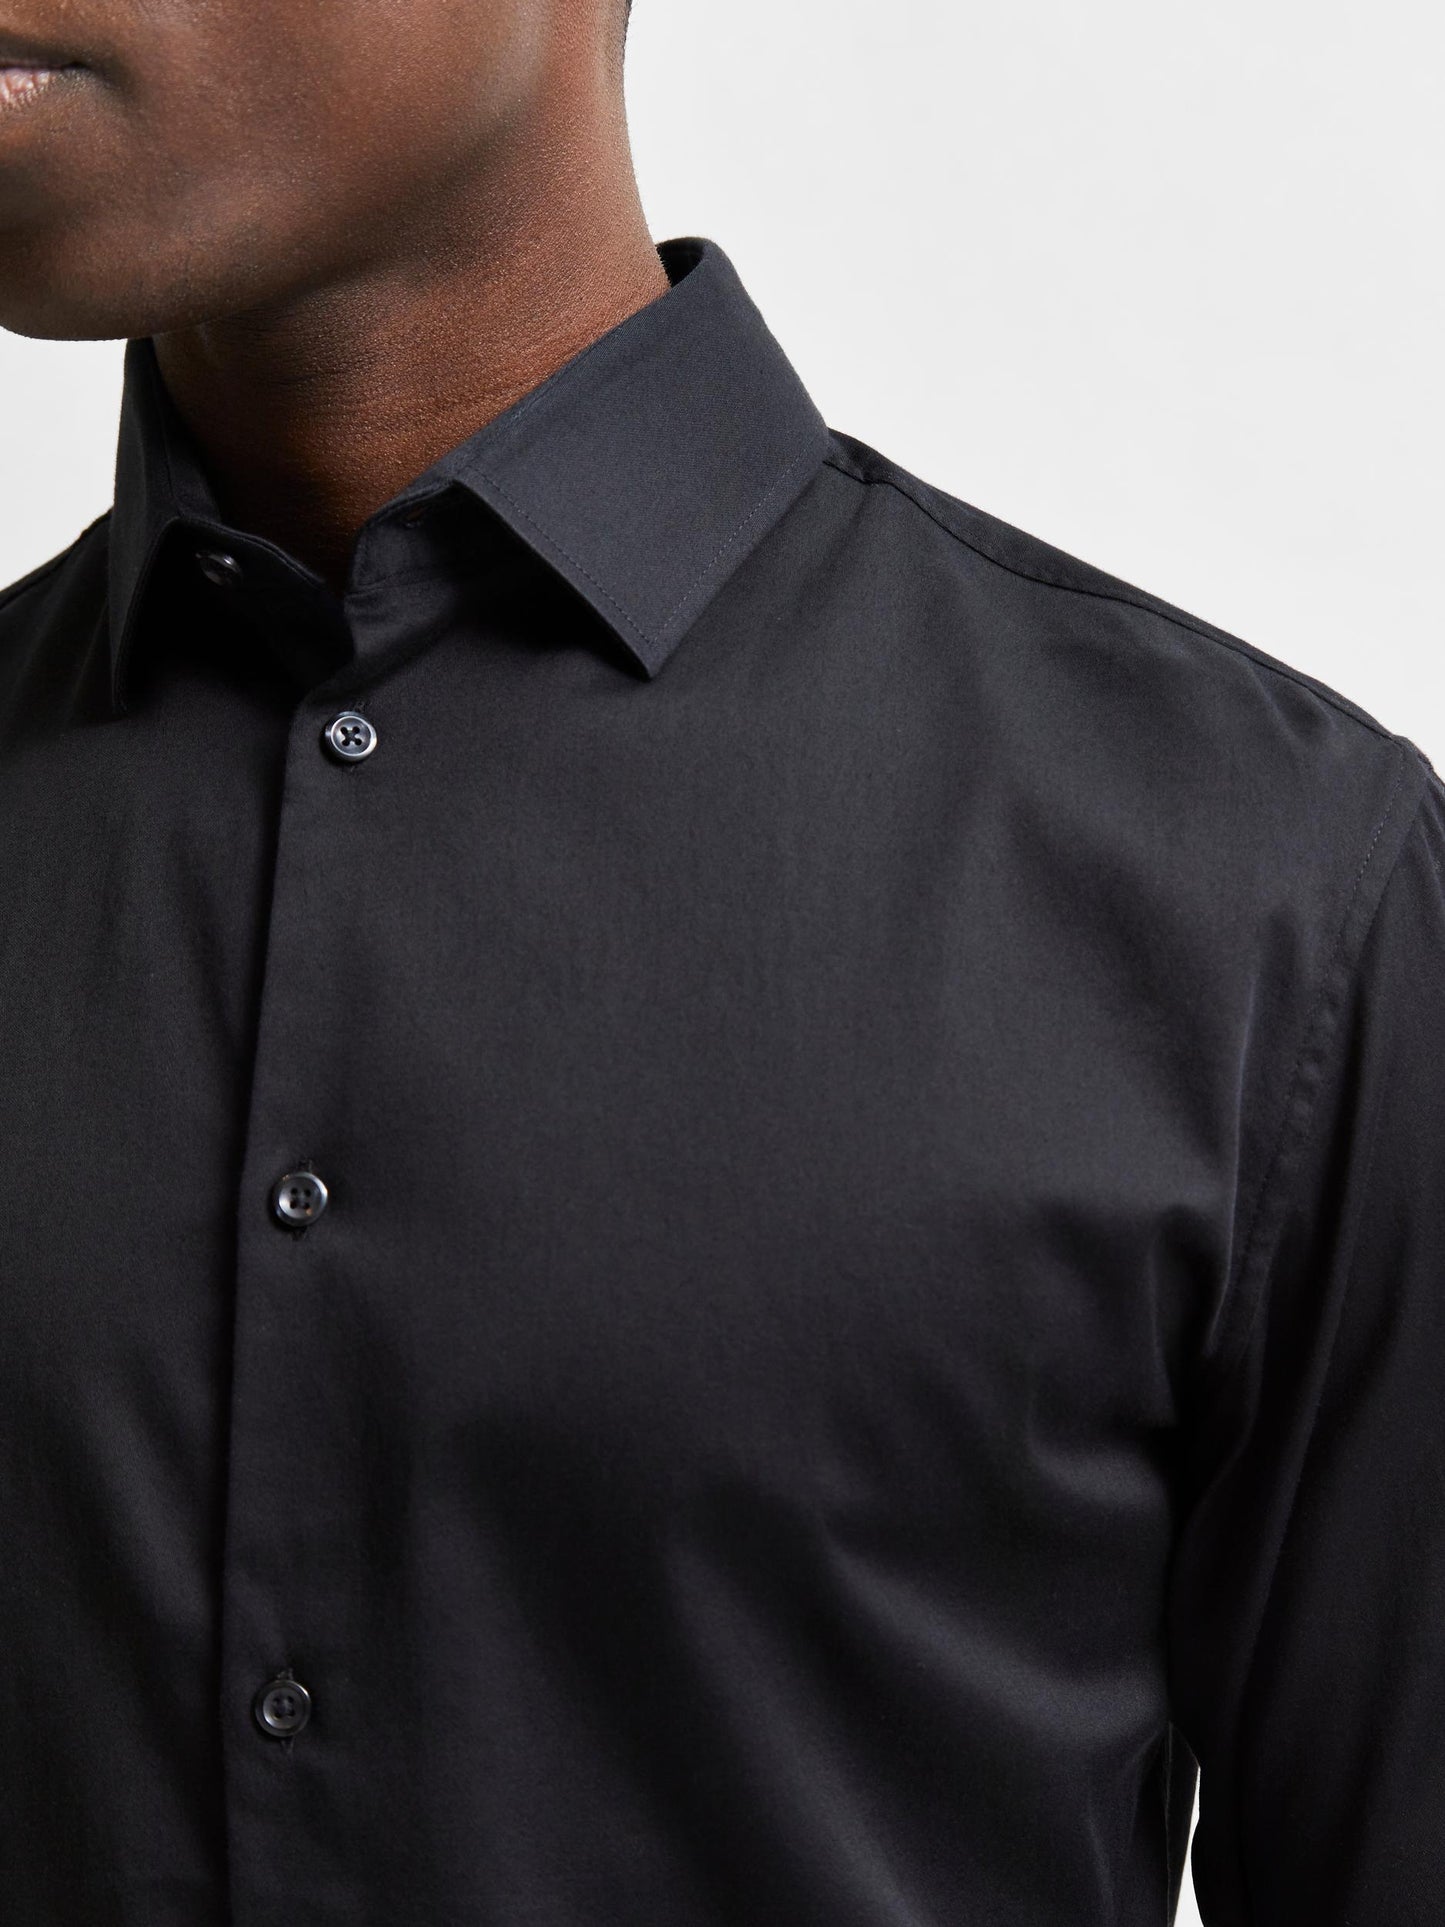 black long sleeve shirt